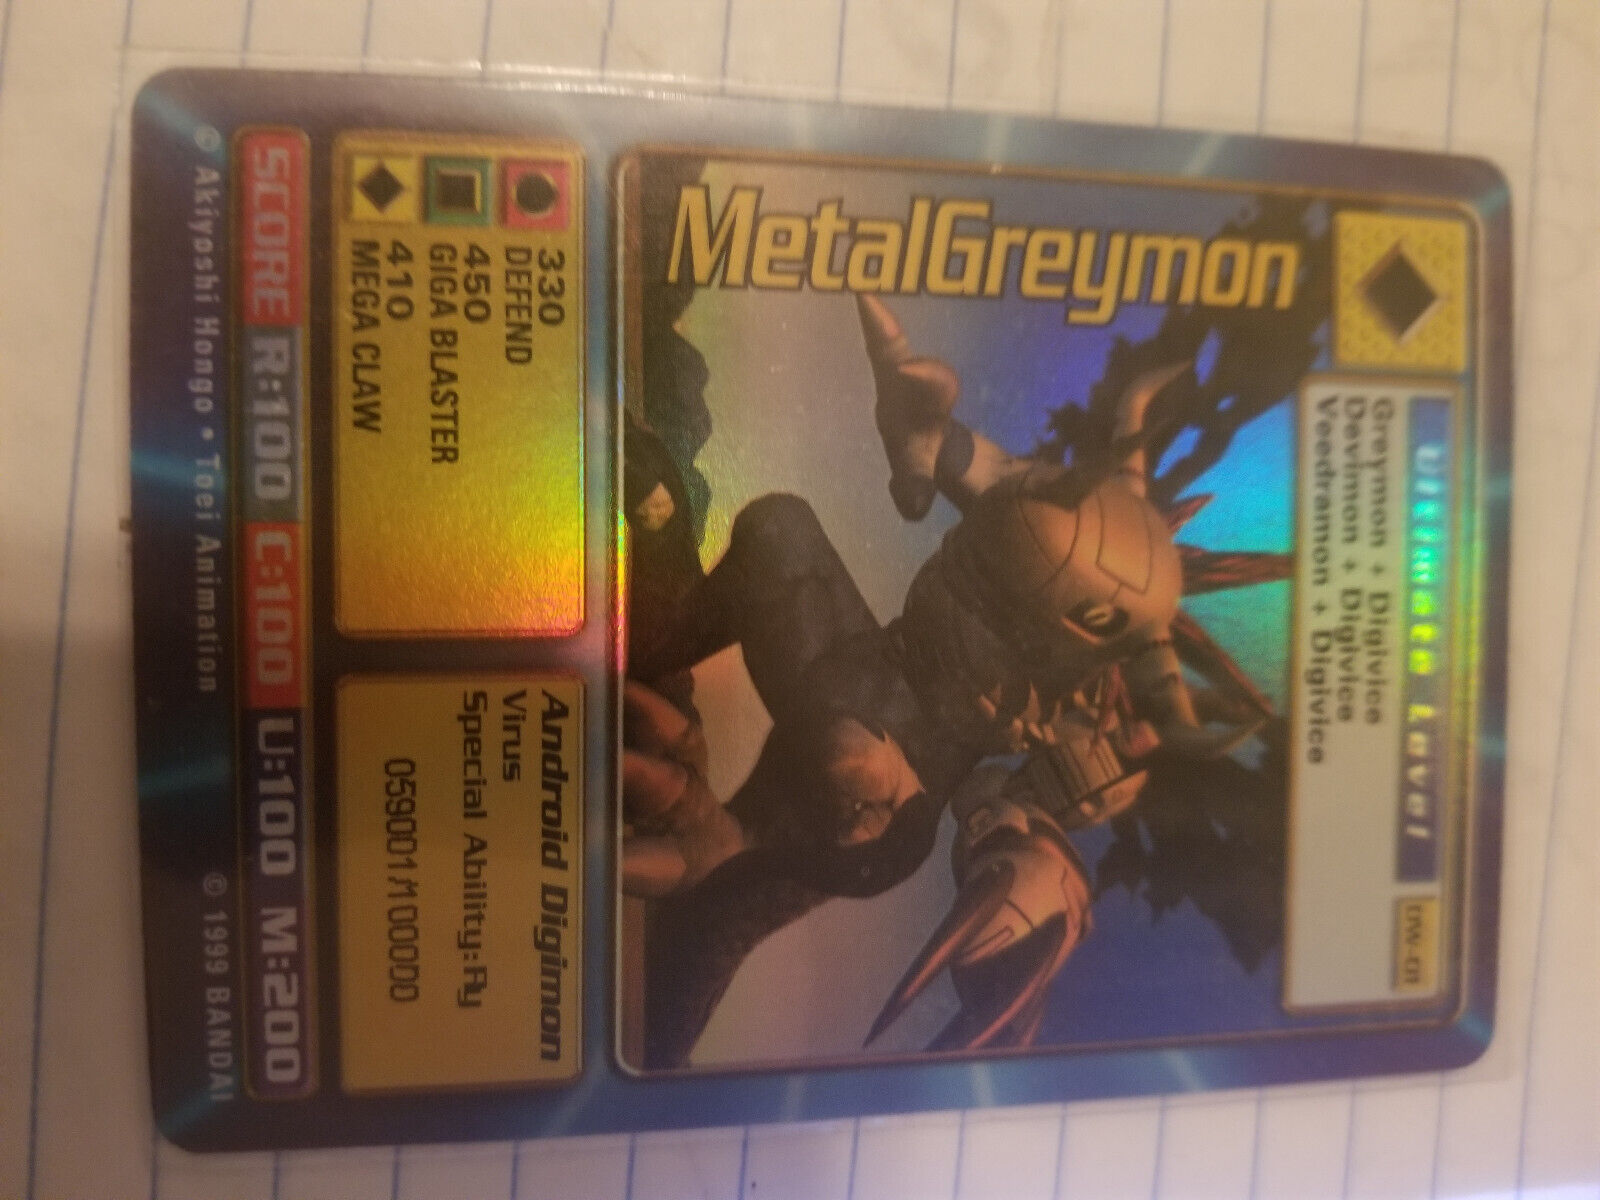 Digimon World PlayStation Promo DW-01 MetalGreymon - number 059001 / 100,000